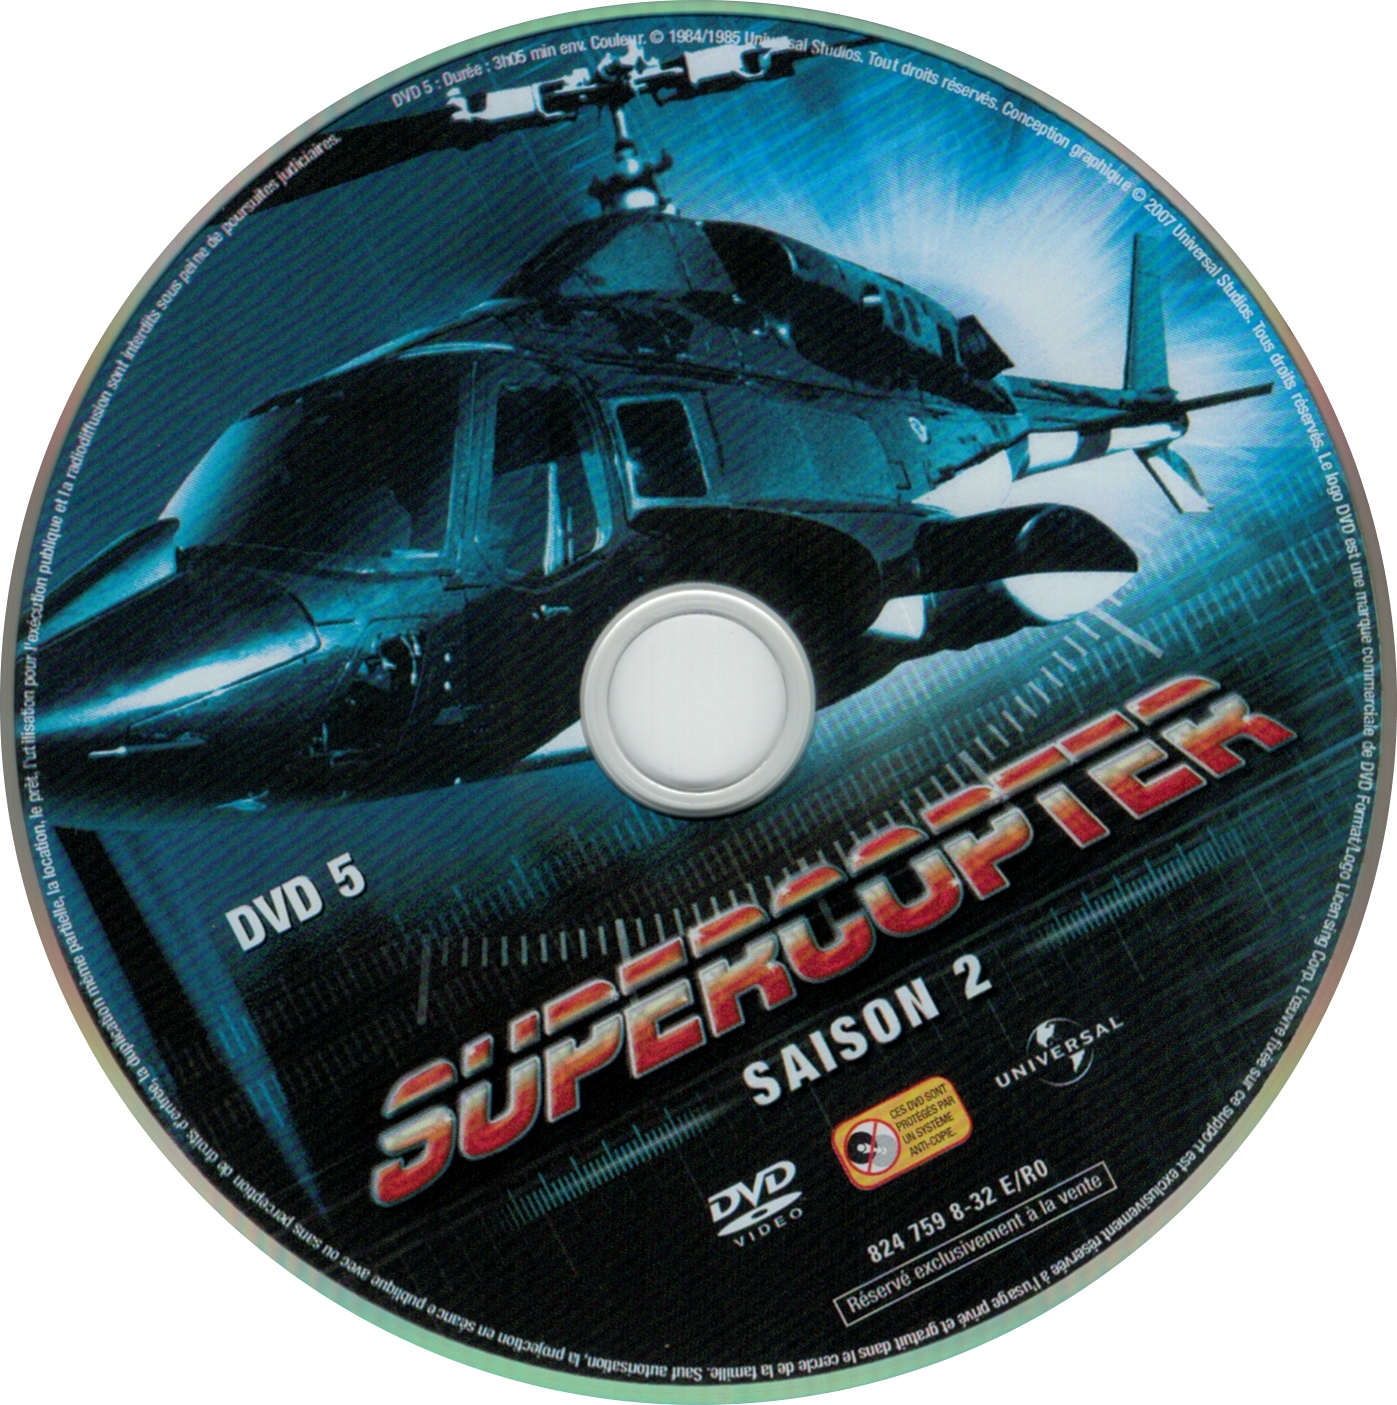 Supercopter Saison 2 DVD 5